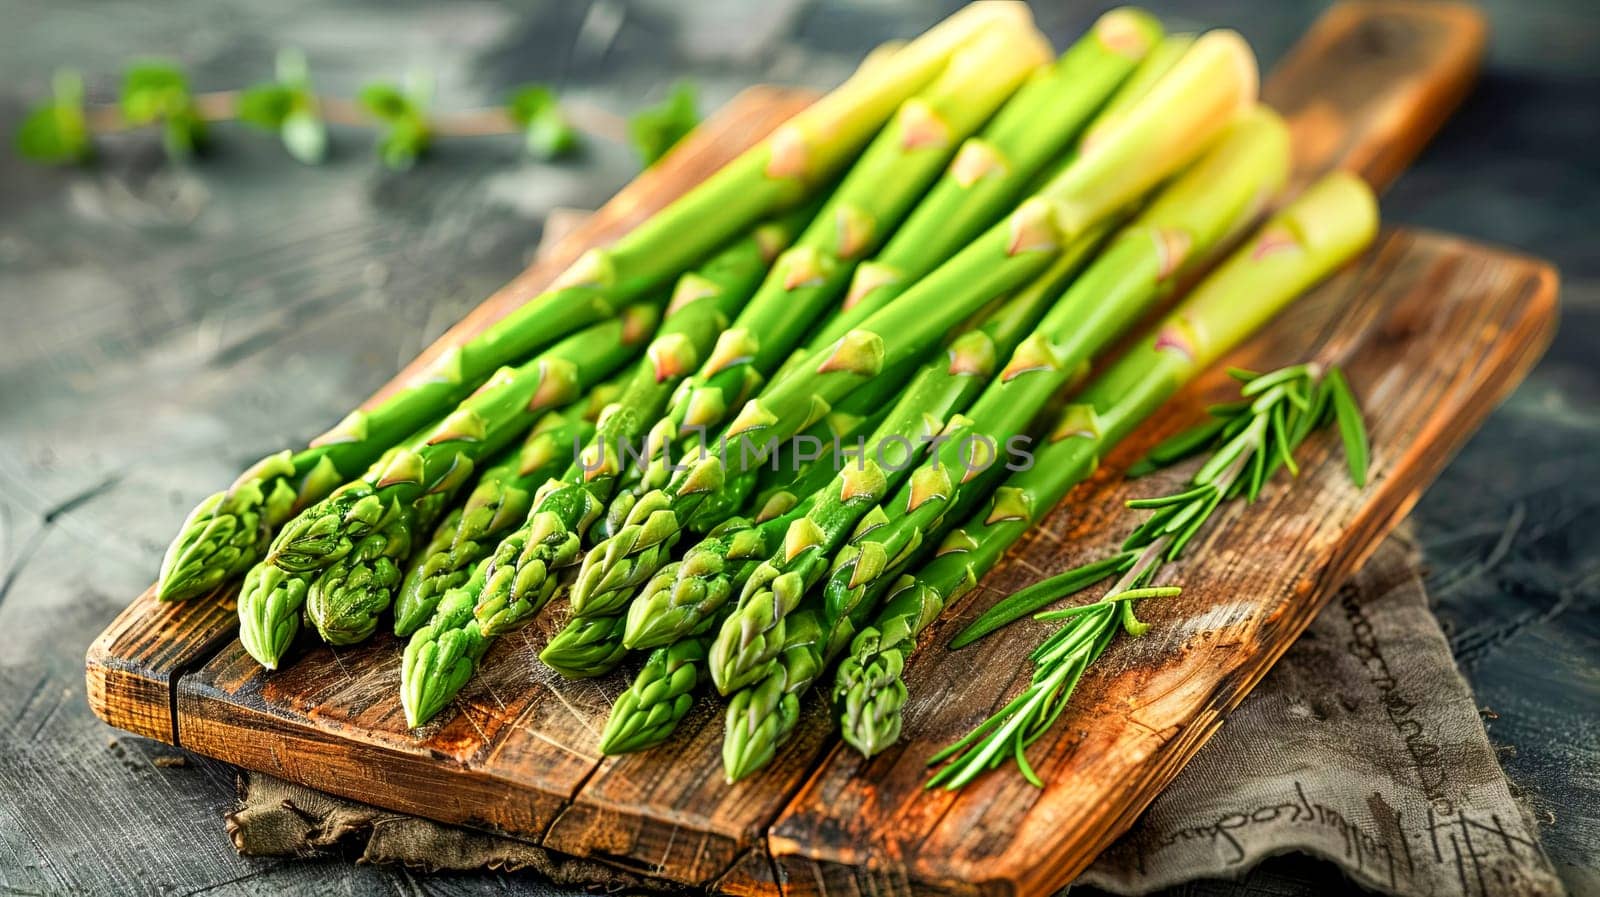 Bunch of fresh green asparagus on a wooden cutting board, top view. by OlgaGubskaya